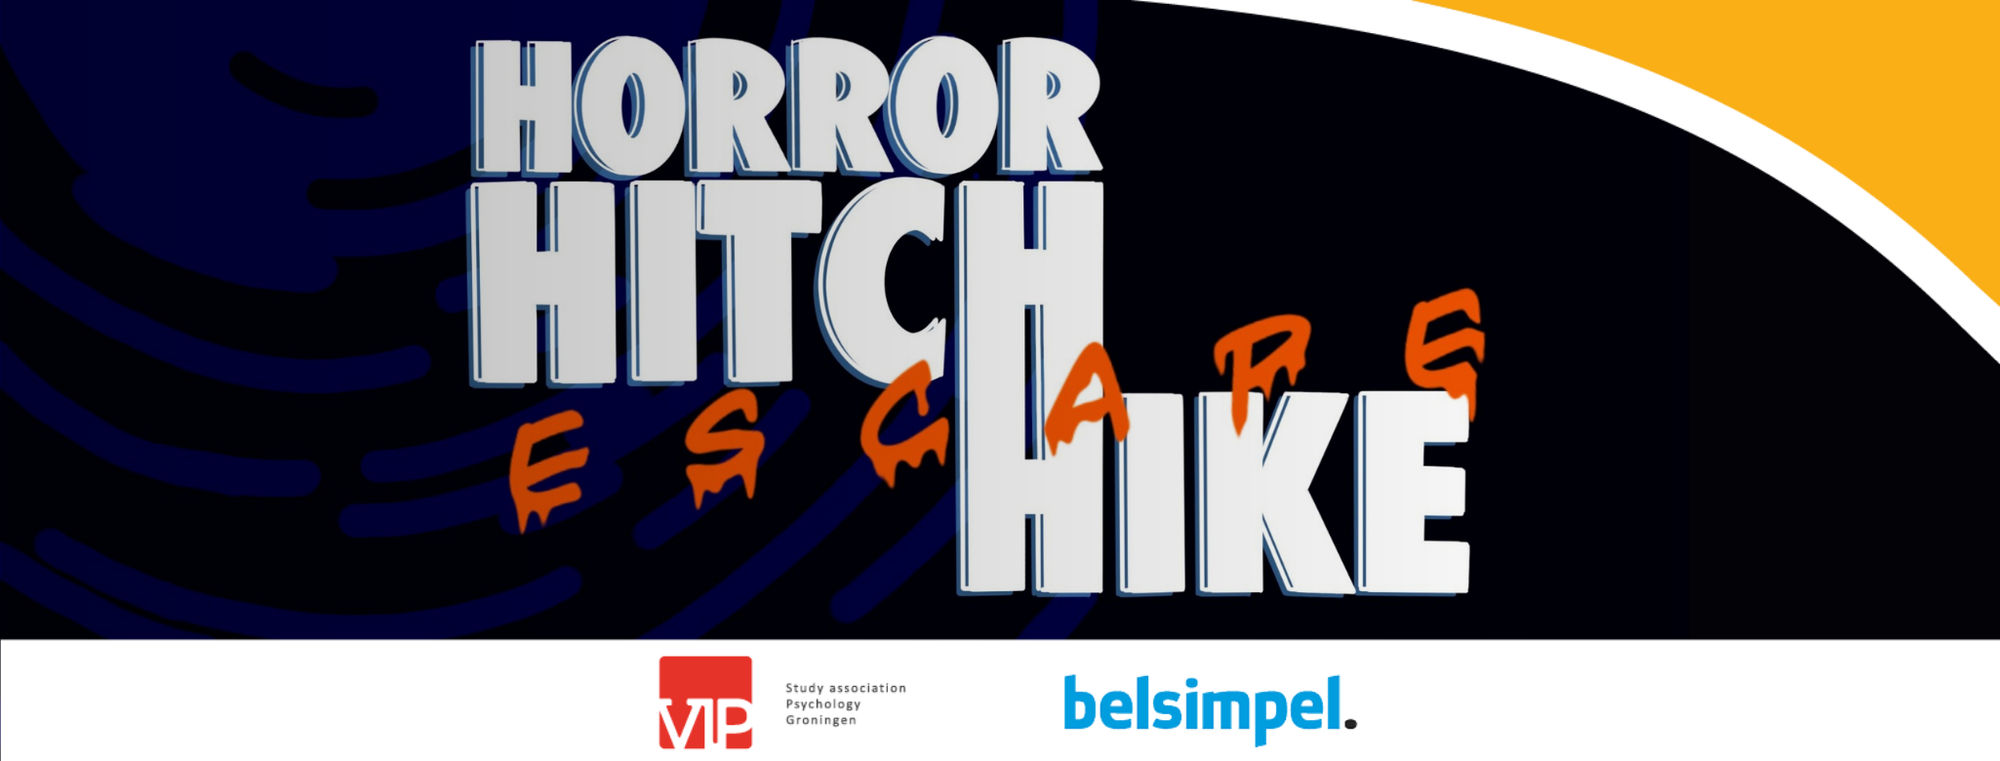 VIP: Horror Hitchhike Escape